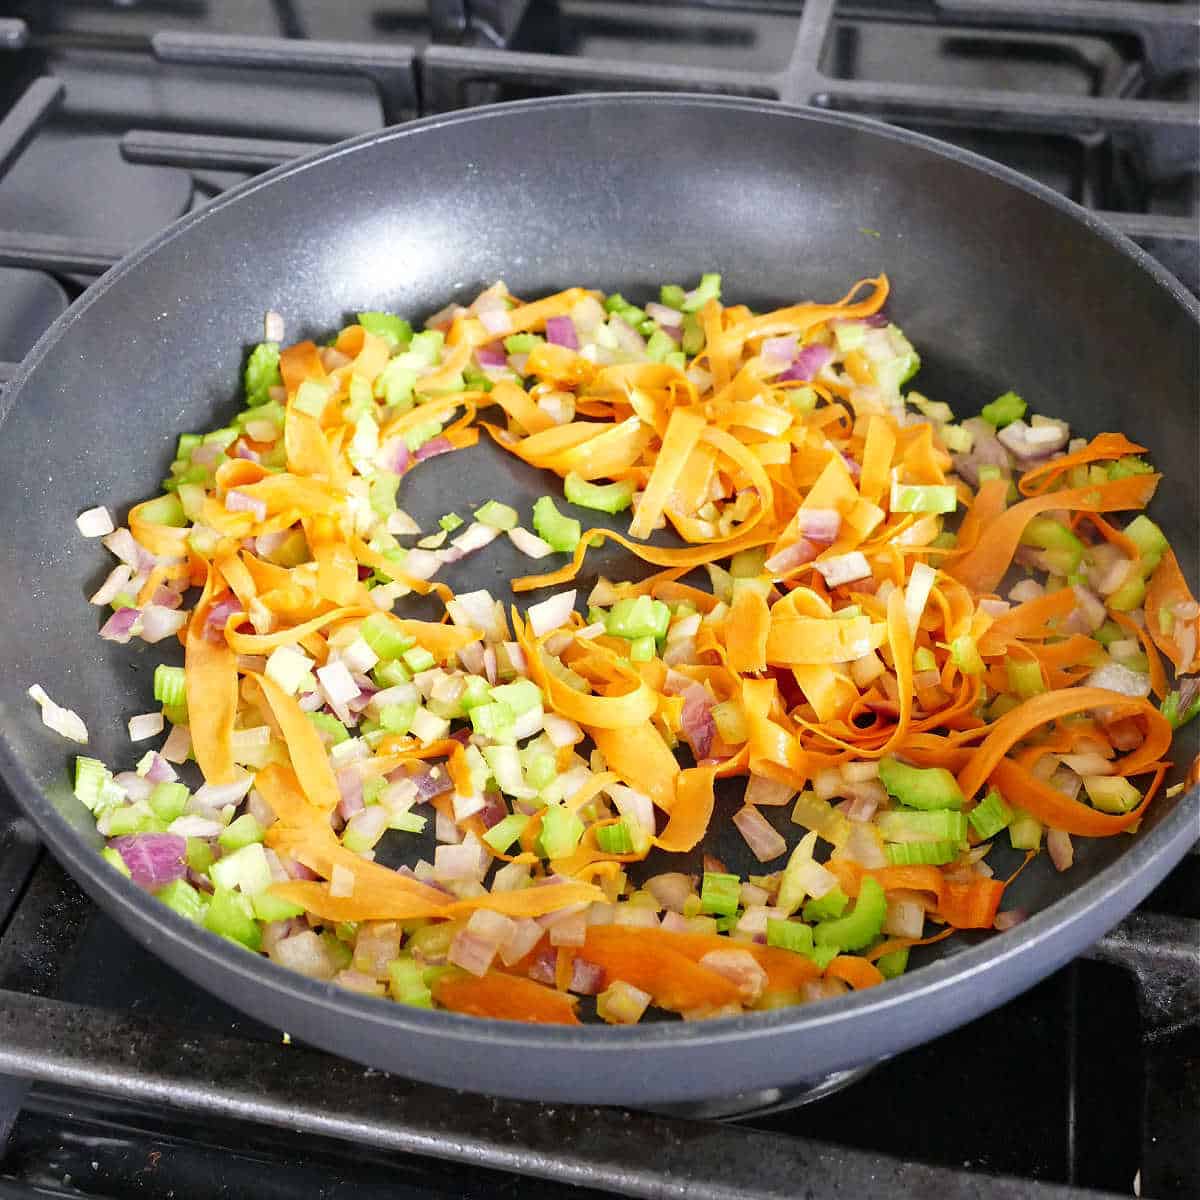 Sautéing veggies in a large skillet.